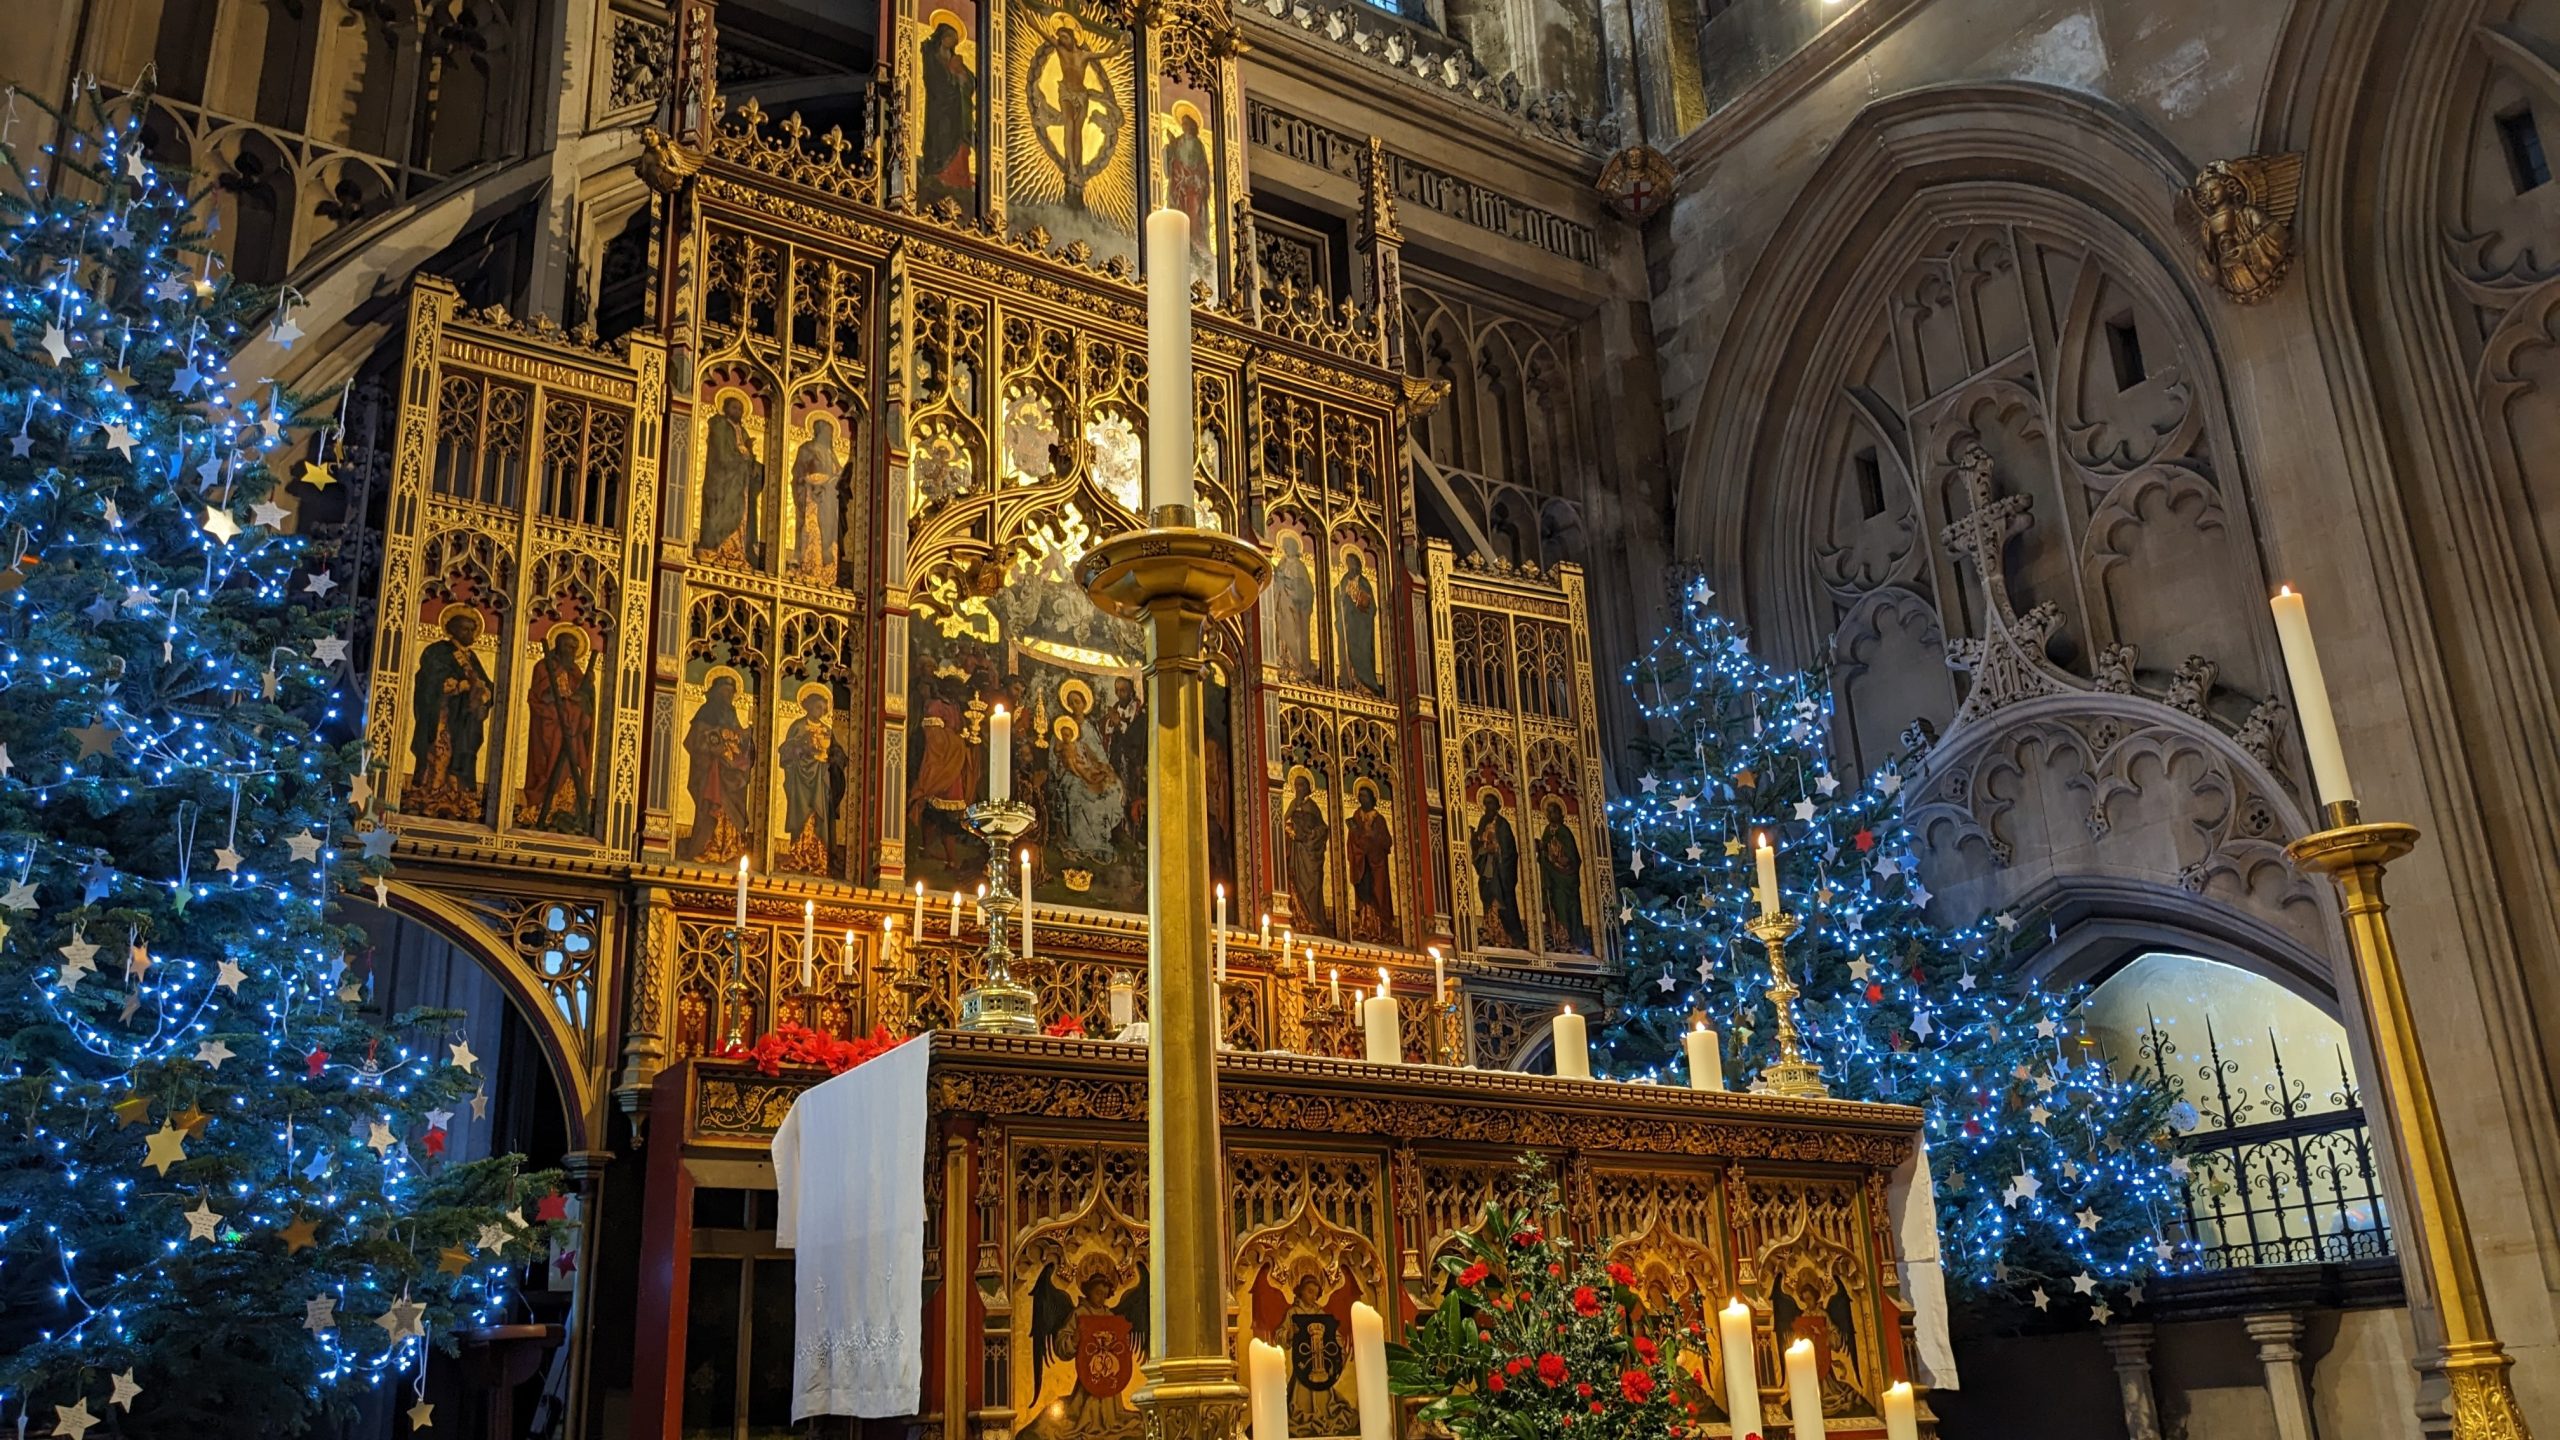 White altar for the Christmas season